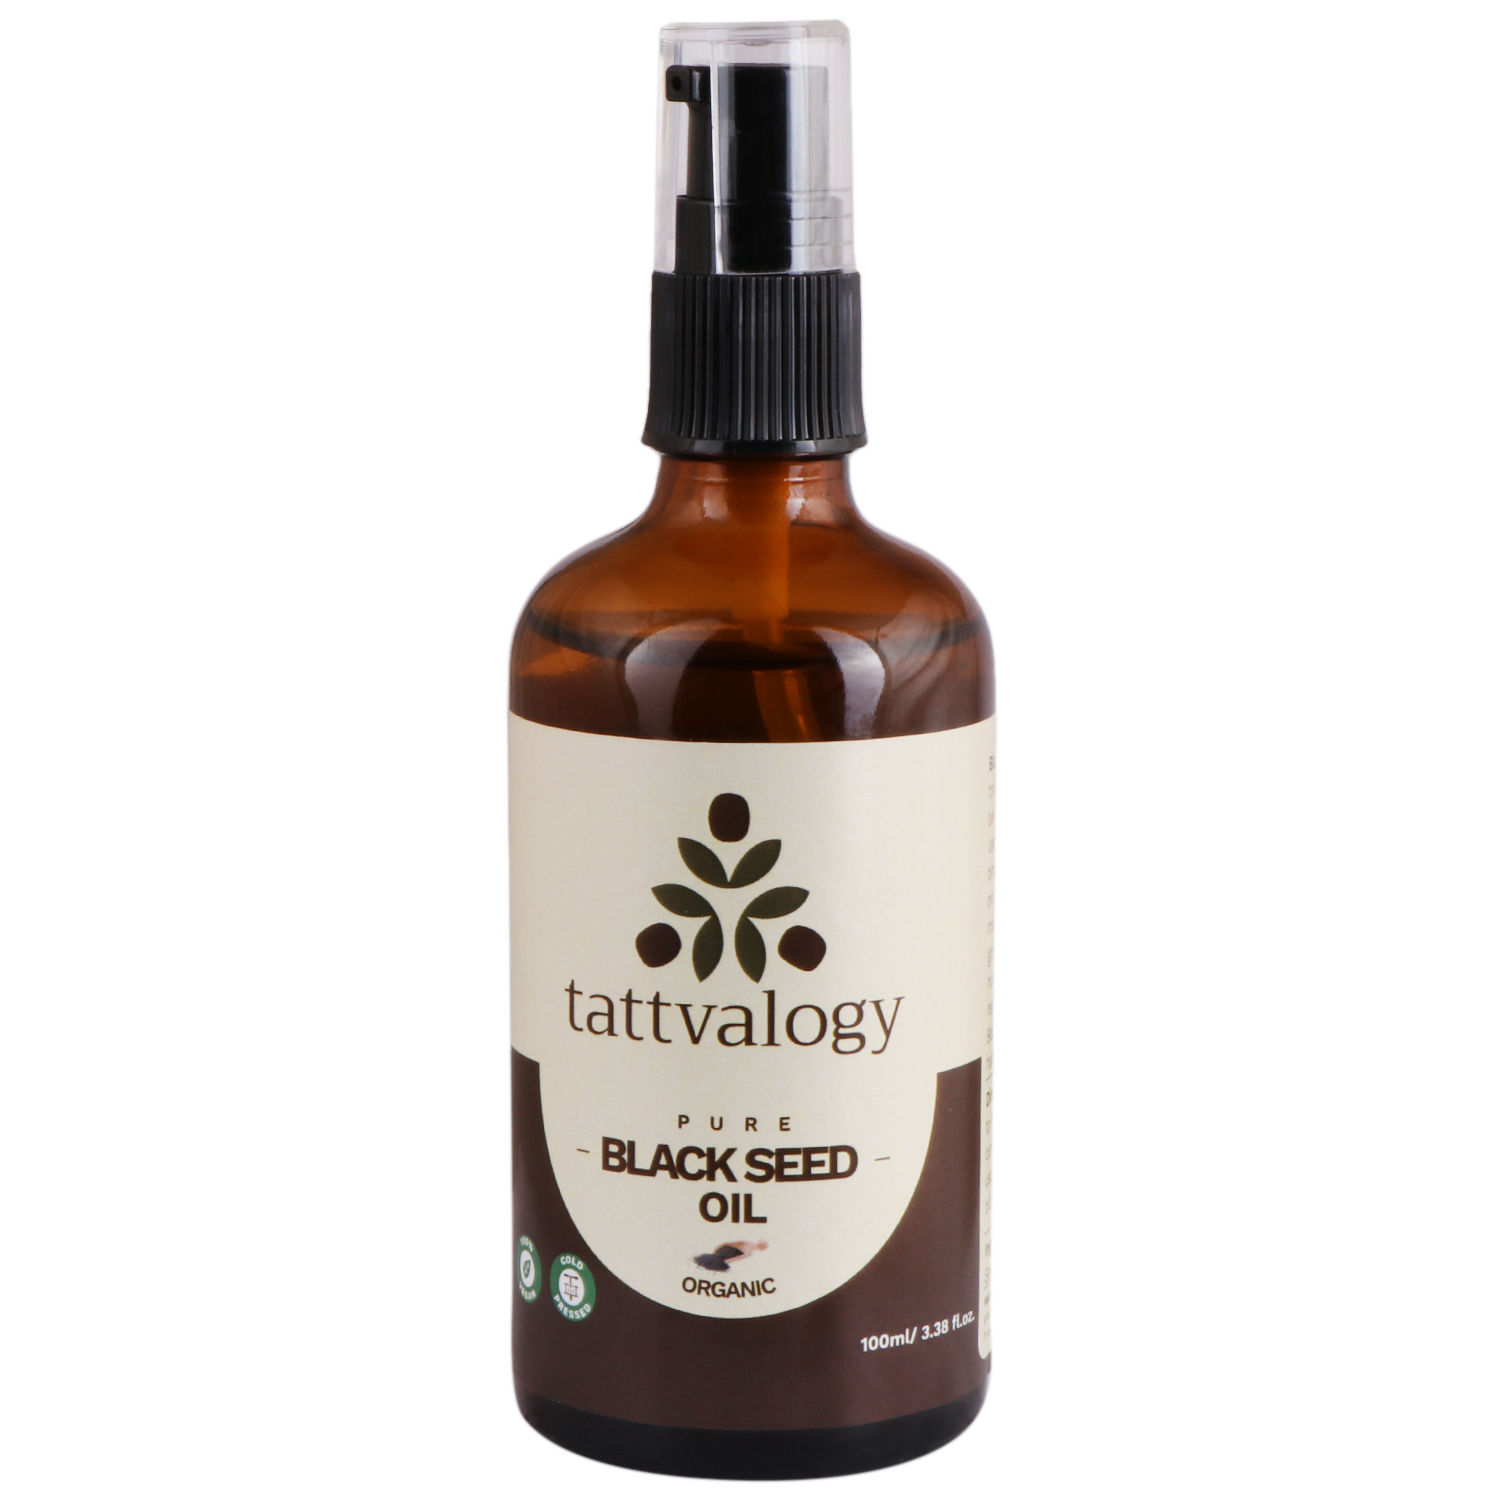 Tattvalogy Pure Black Seed Oil, Organic & Natural Kalonji Nigella Sativa Oil for Hair & Skin